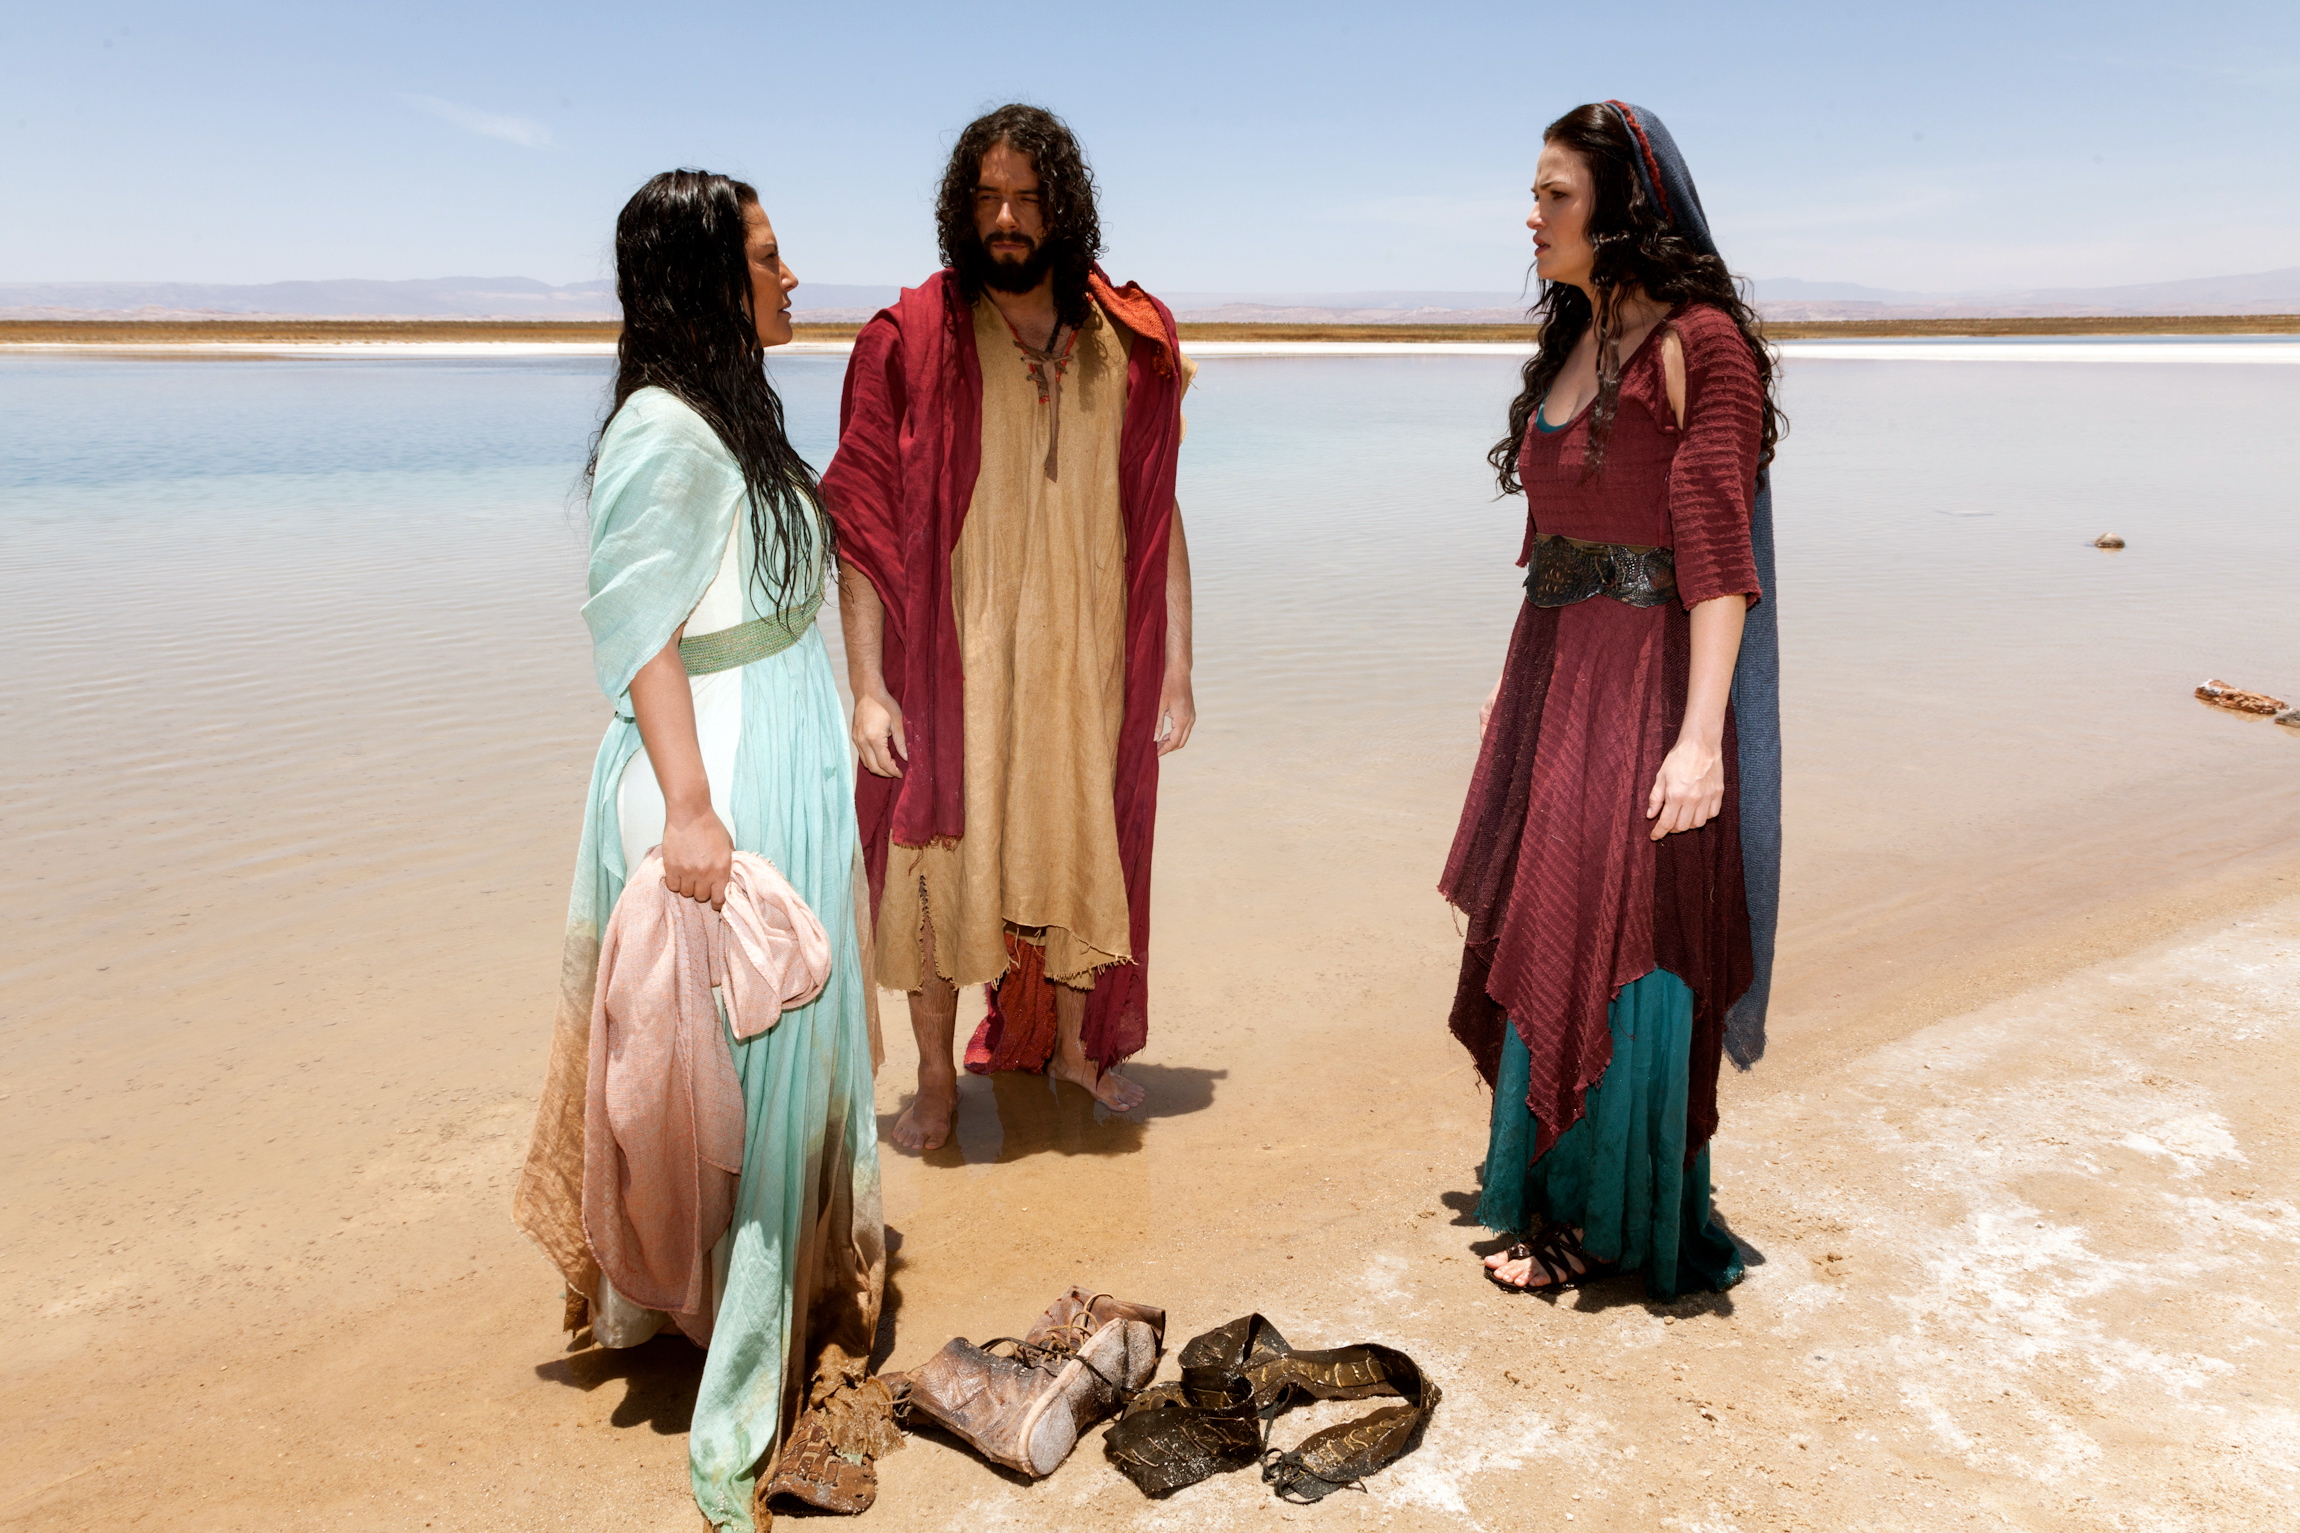 Nanda Ziegler, Guilherme Winter and Carla Regina filming in the Atacama desert, Chile, for TV series José do Egito.